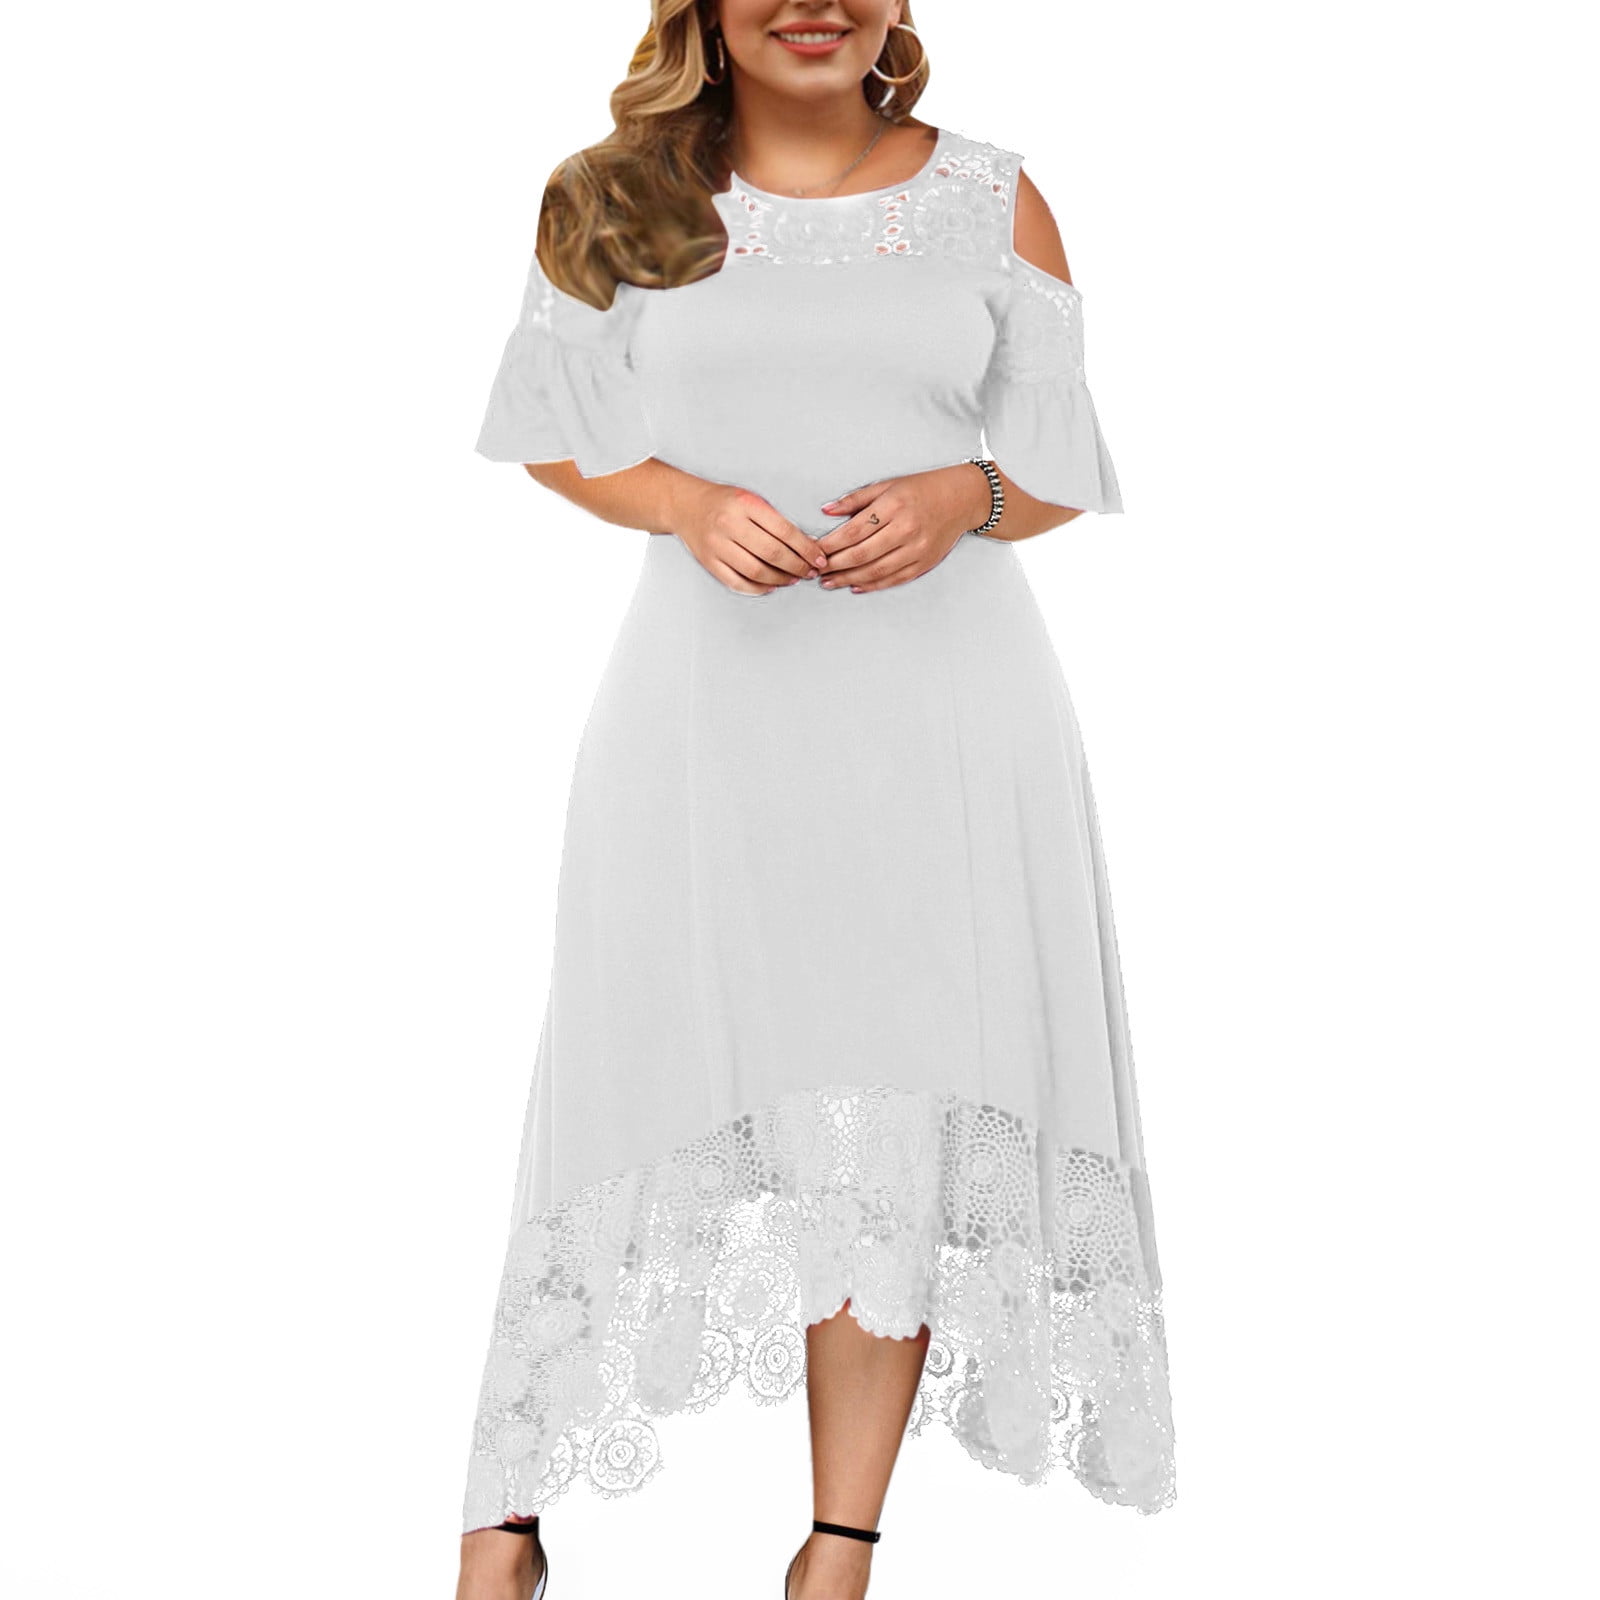 Lopecy-Sta Plus Dress Short Sleeve Lace Dresses for Women Round Neck White - 3XL - Walmart.com